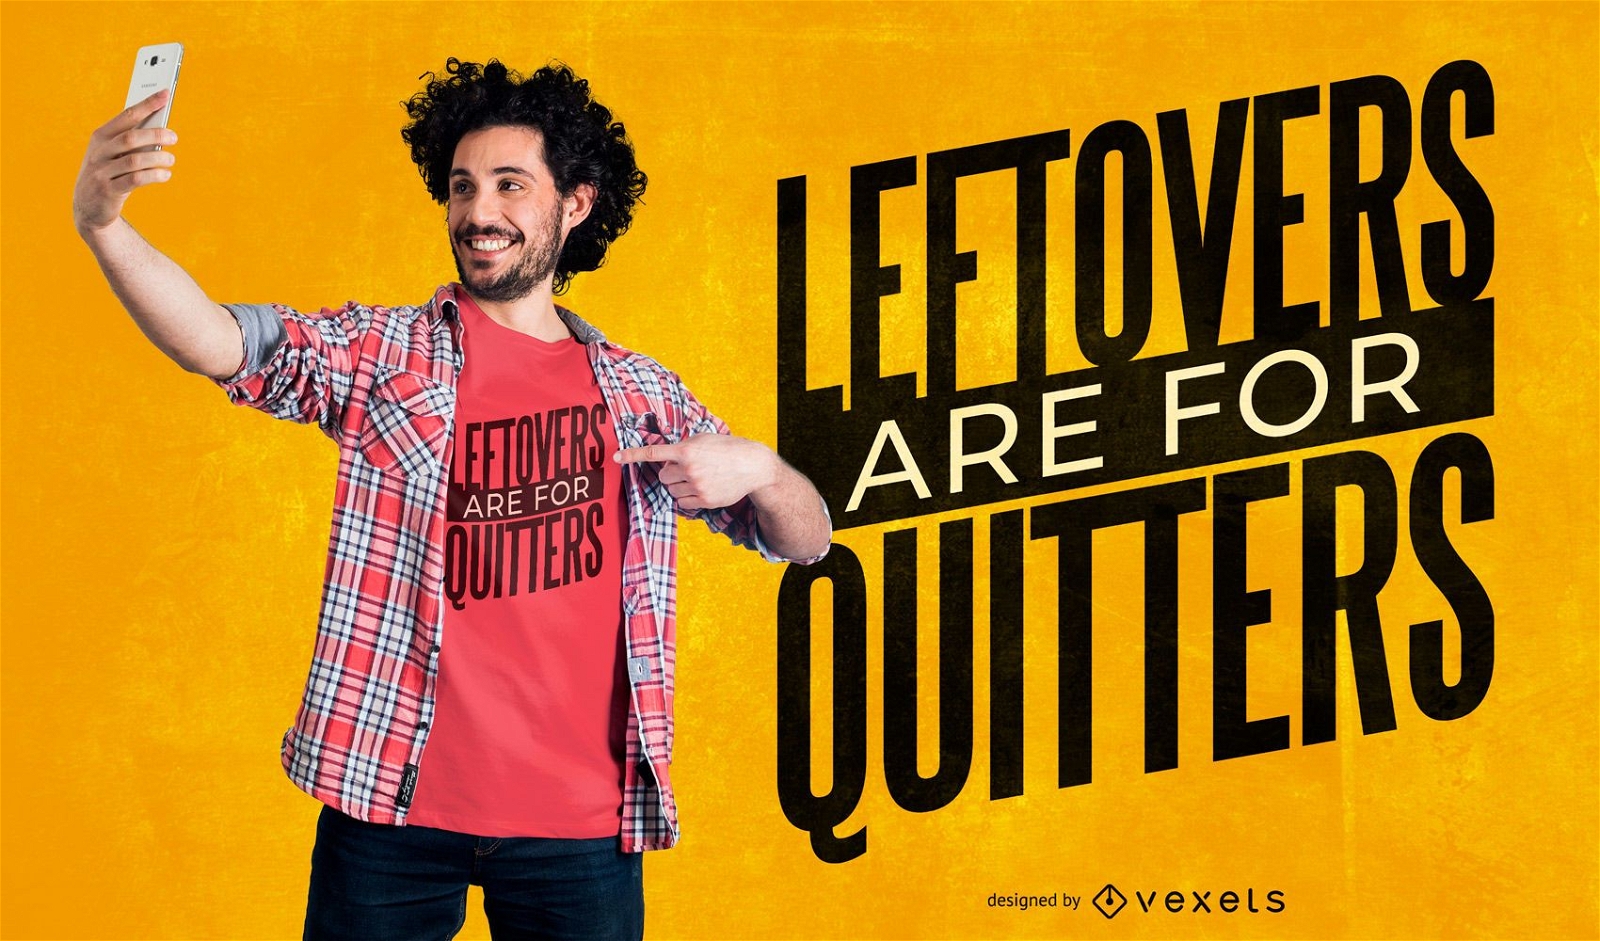 Leftovers quote t-shirt design